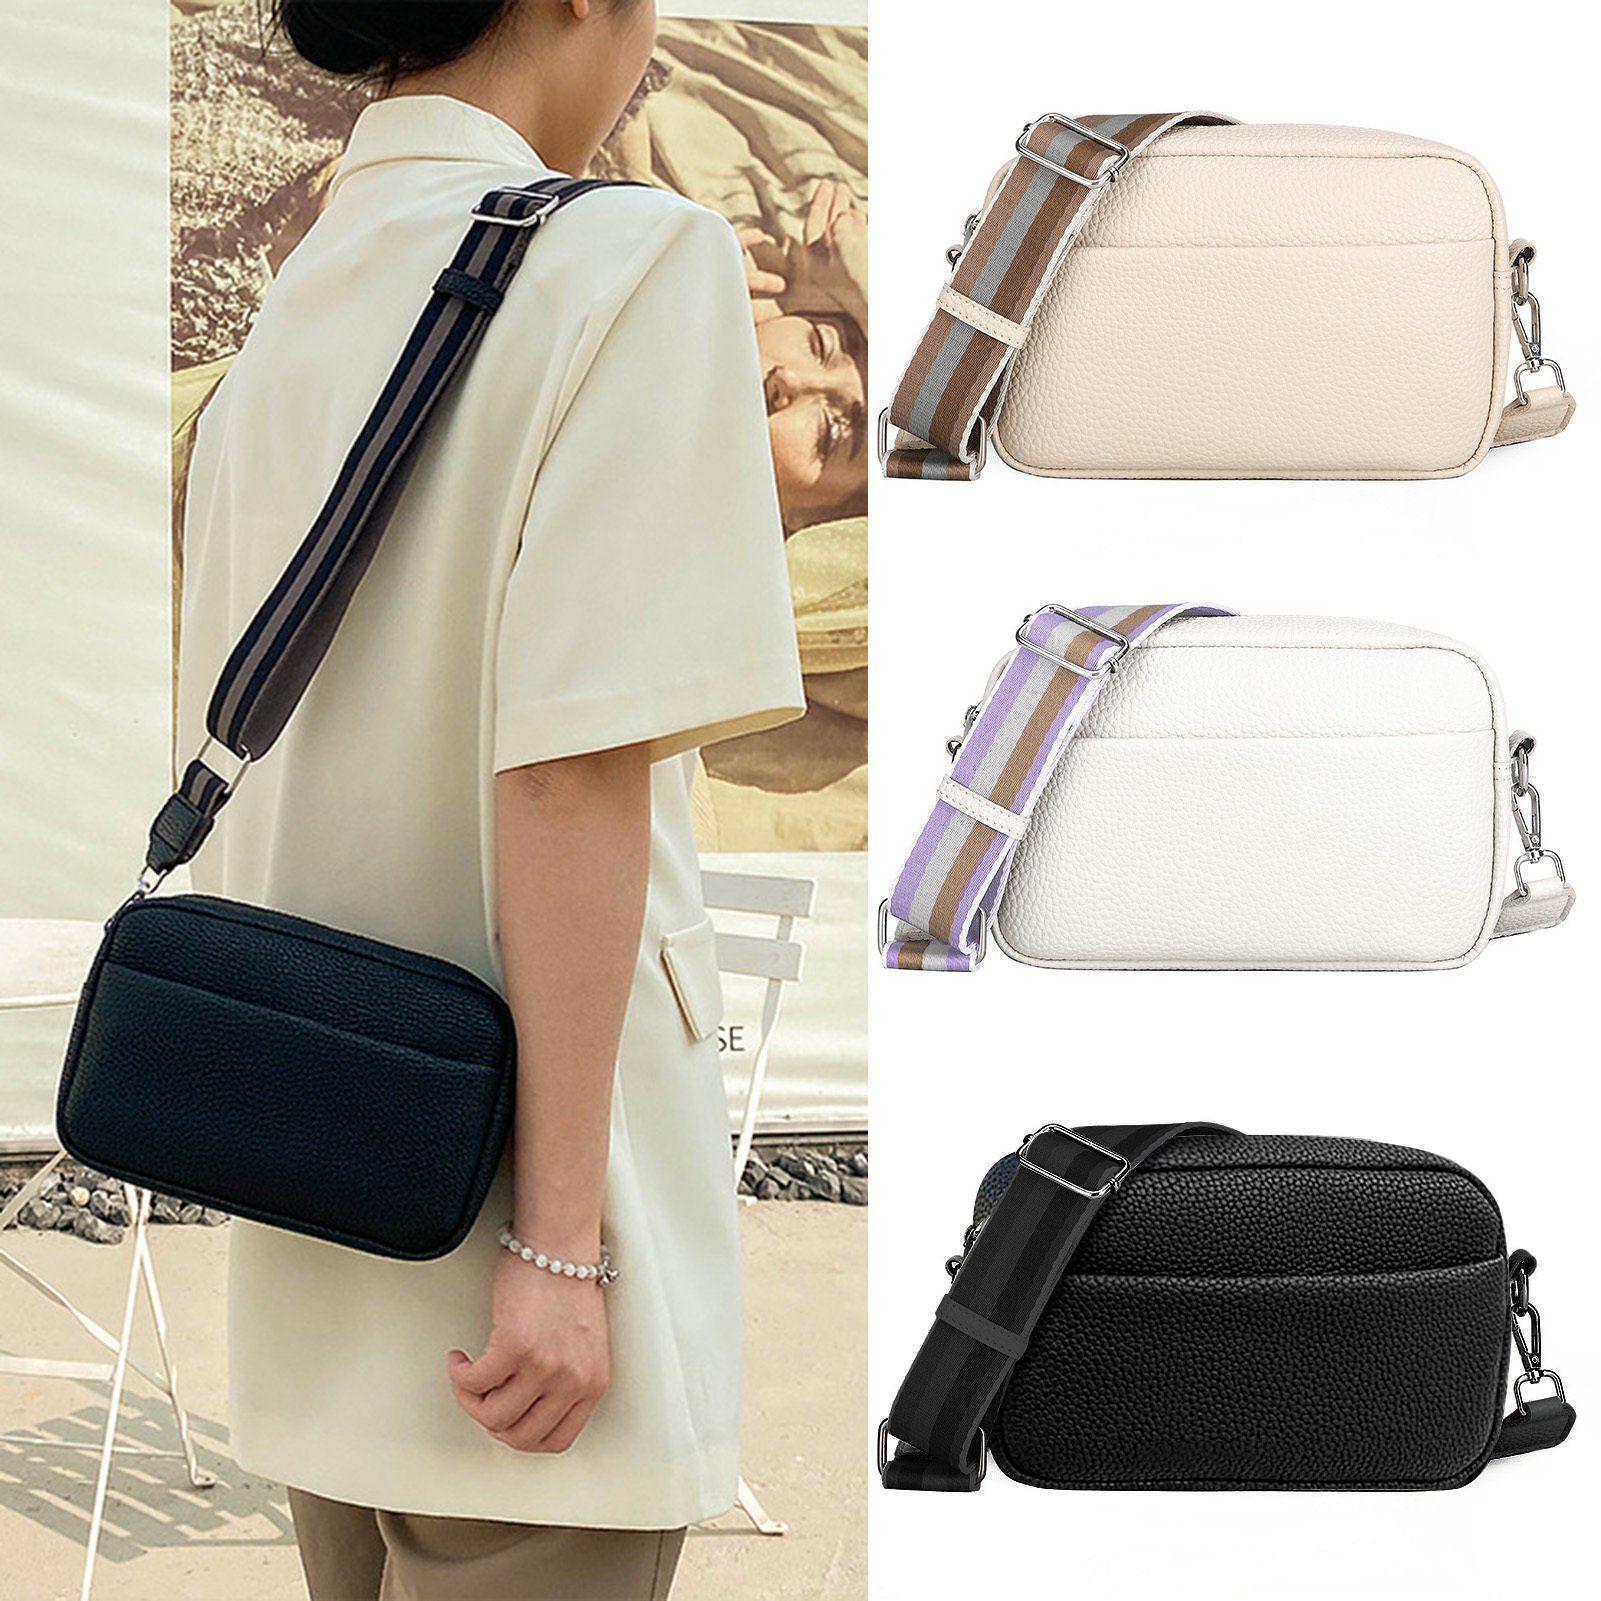 Aus beige Handtasche, Blusmart Tragbar Bag Crossbody PU-Leder, Umhängetasche Damen-Umhängetasche